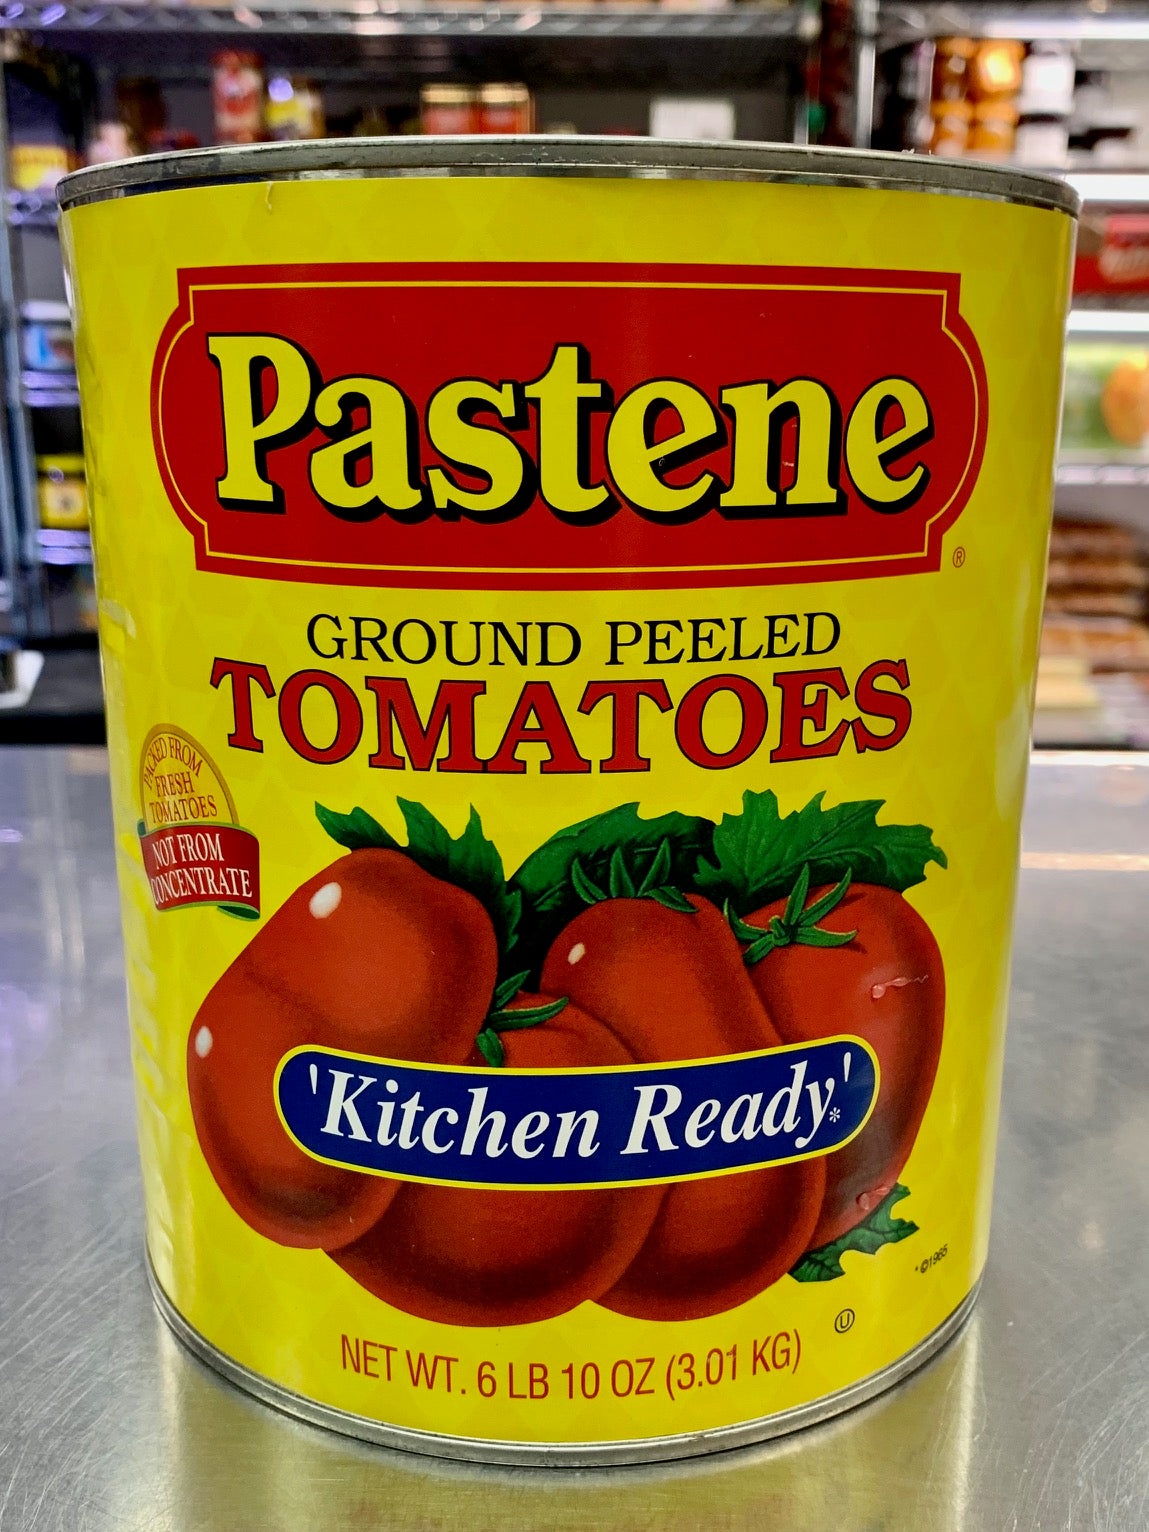 Ground Peeled Tomatoes - Pastene